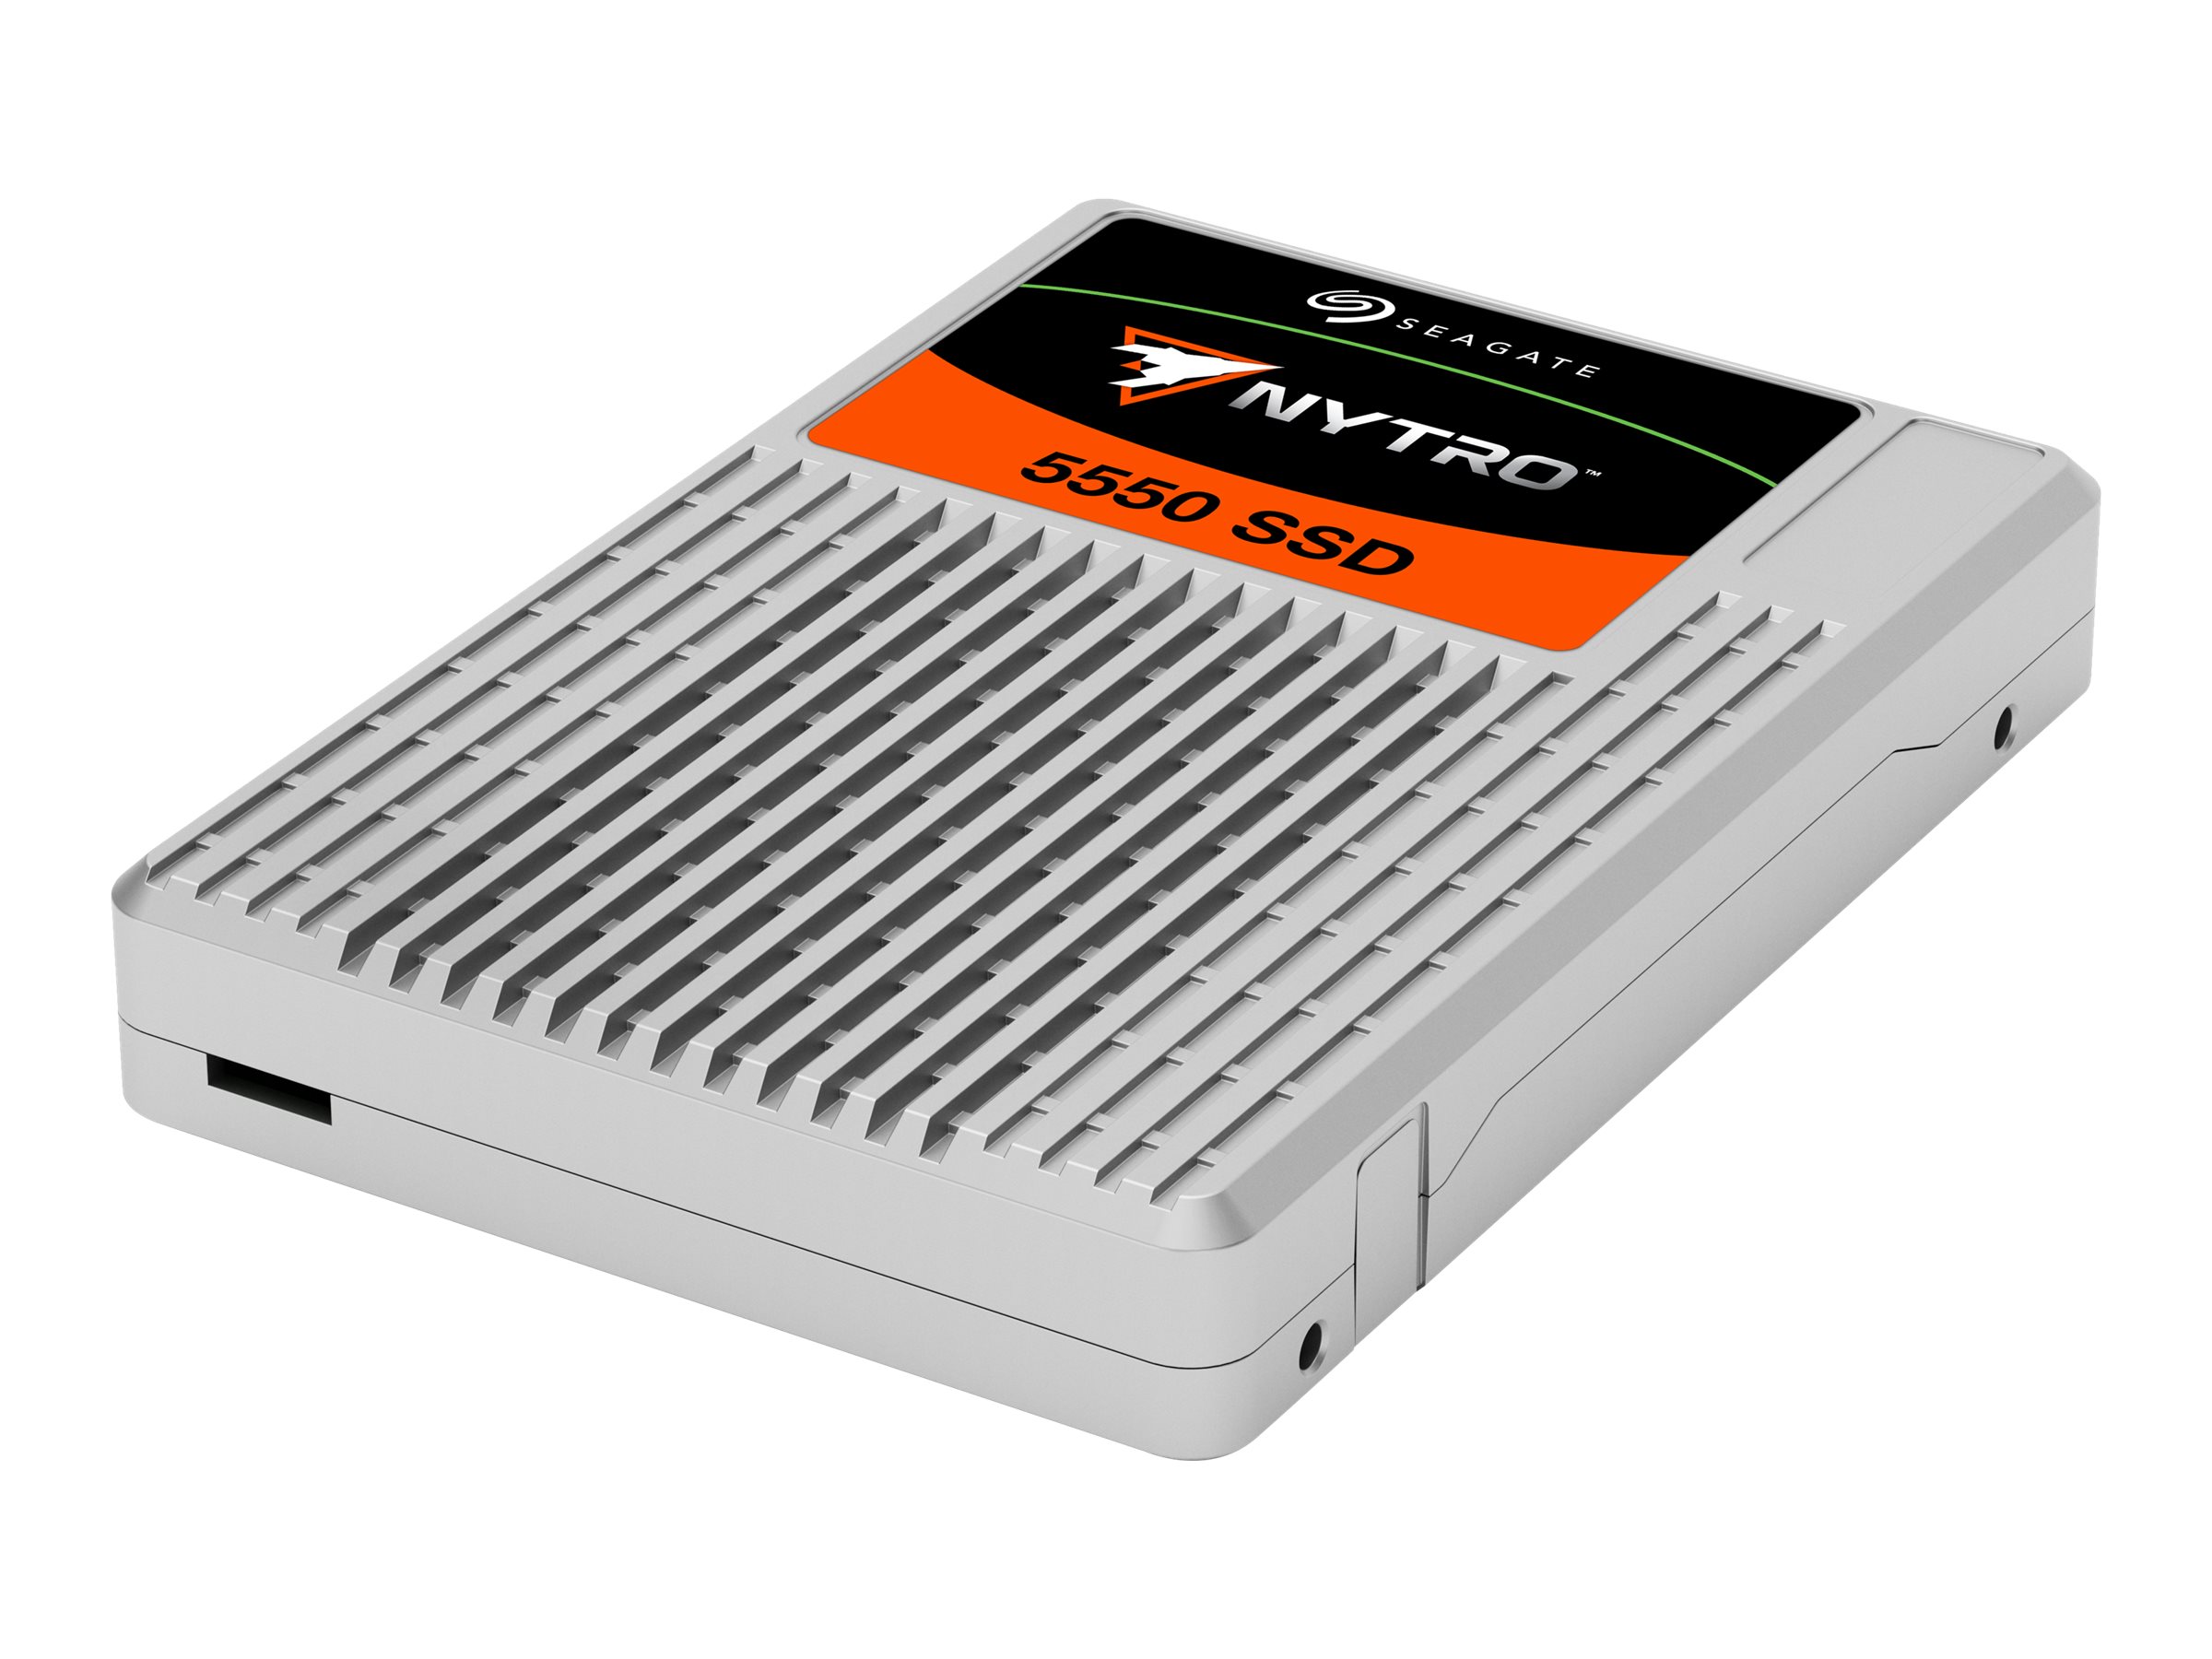 Seagate Nytro 5550M - SSD - Mixed Use - verschlüsselt - 3.2 TB - intern